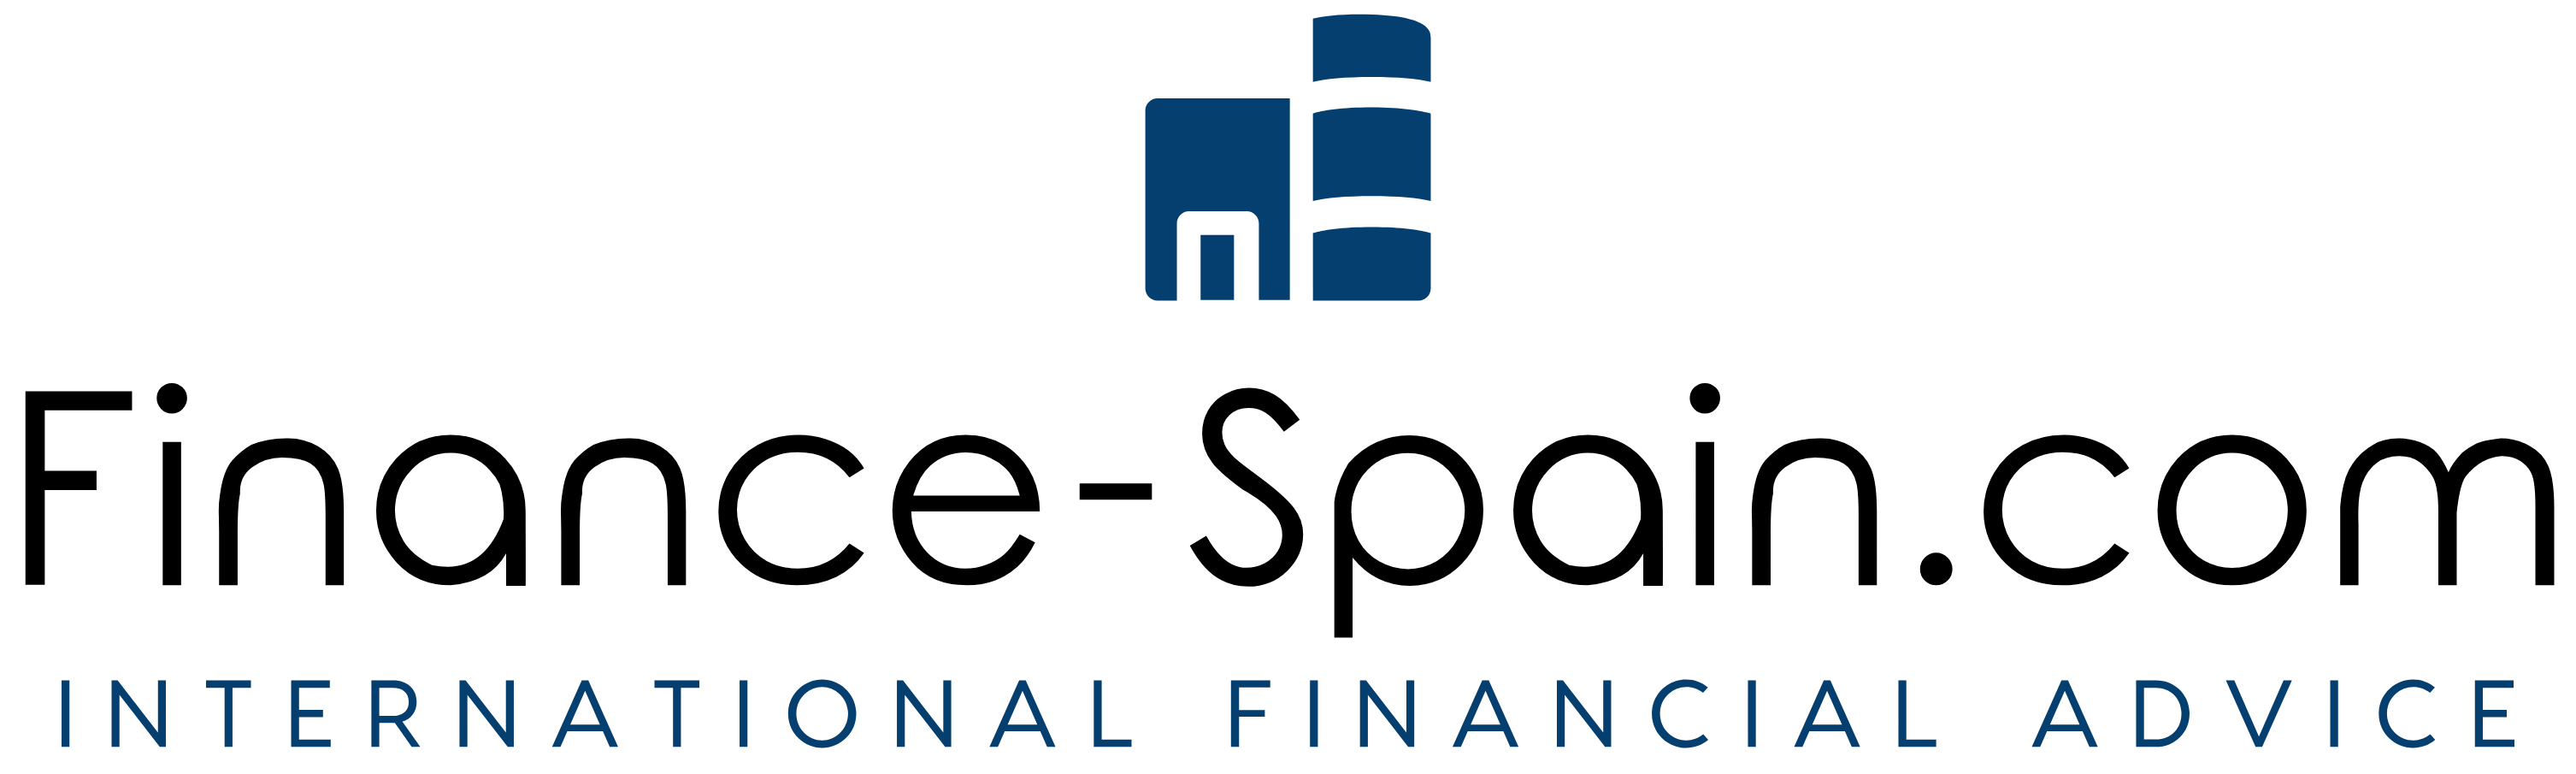 Finance Spain logo